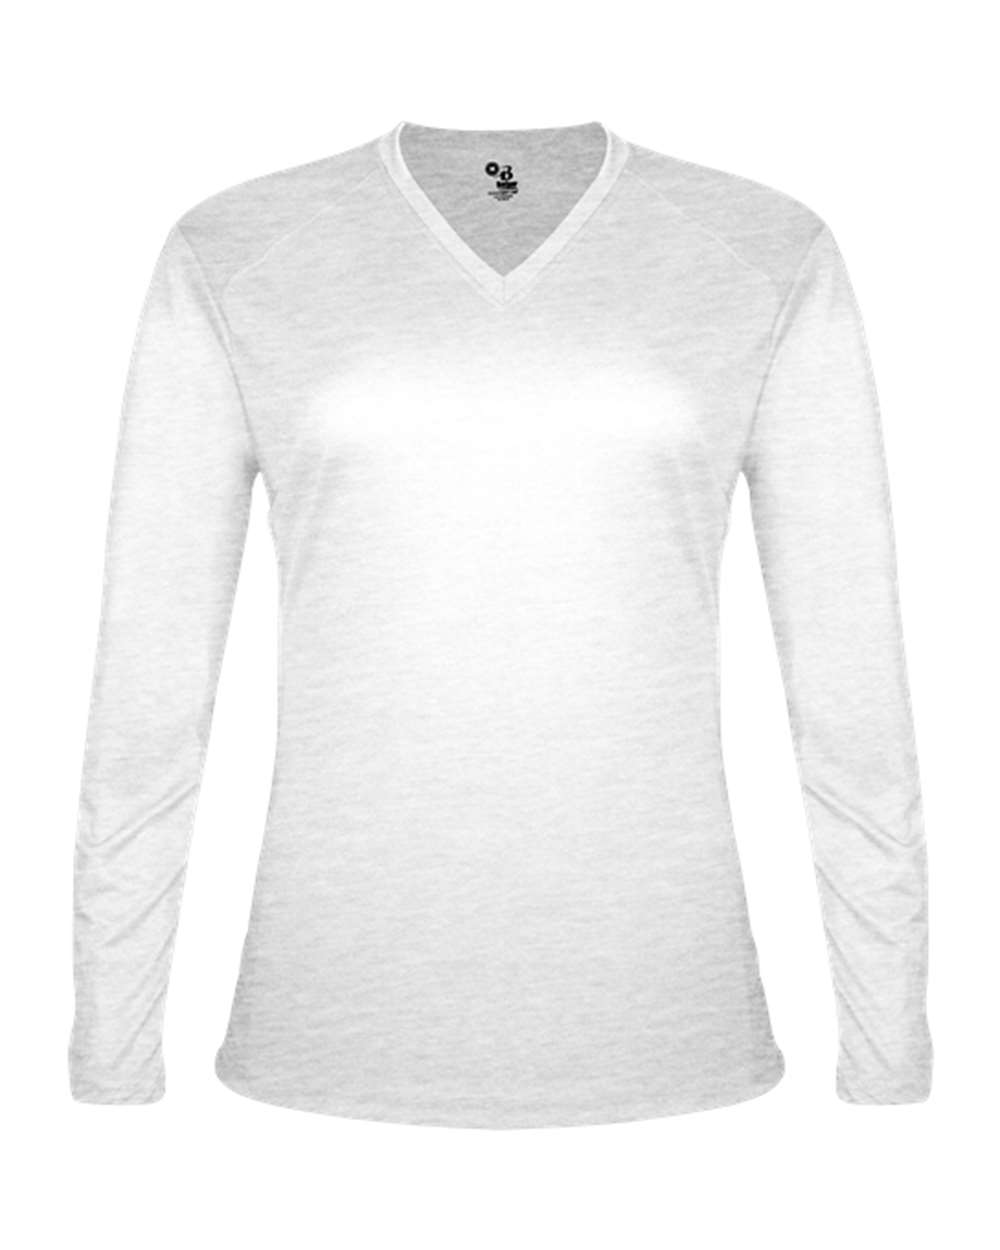 Womens Tri-Blend Long Sleeve T-Shirt-